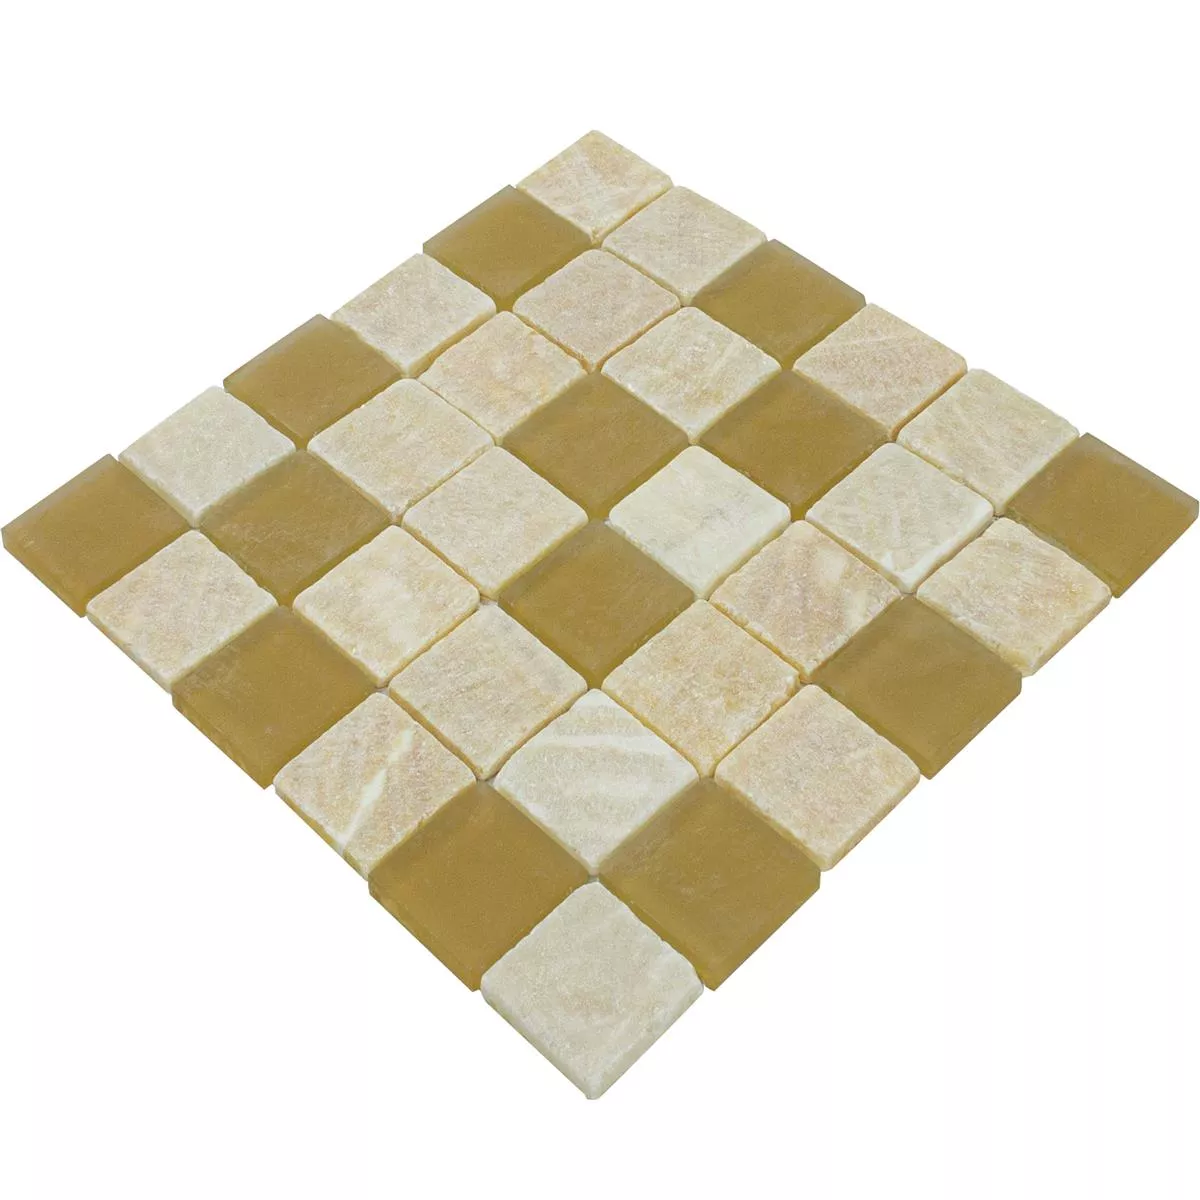 Glass Natural Stone Mosaic Tiles Aurelius Brown Beige Mix